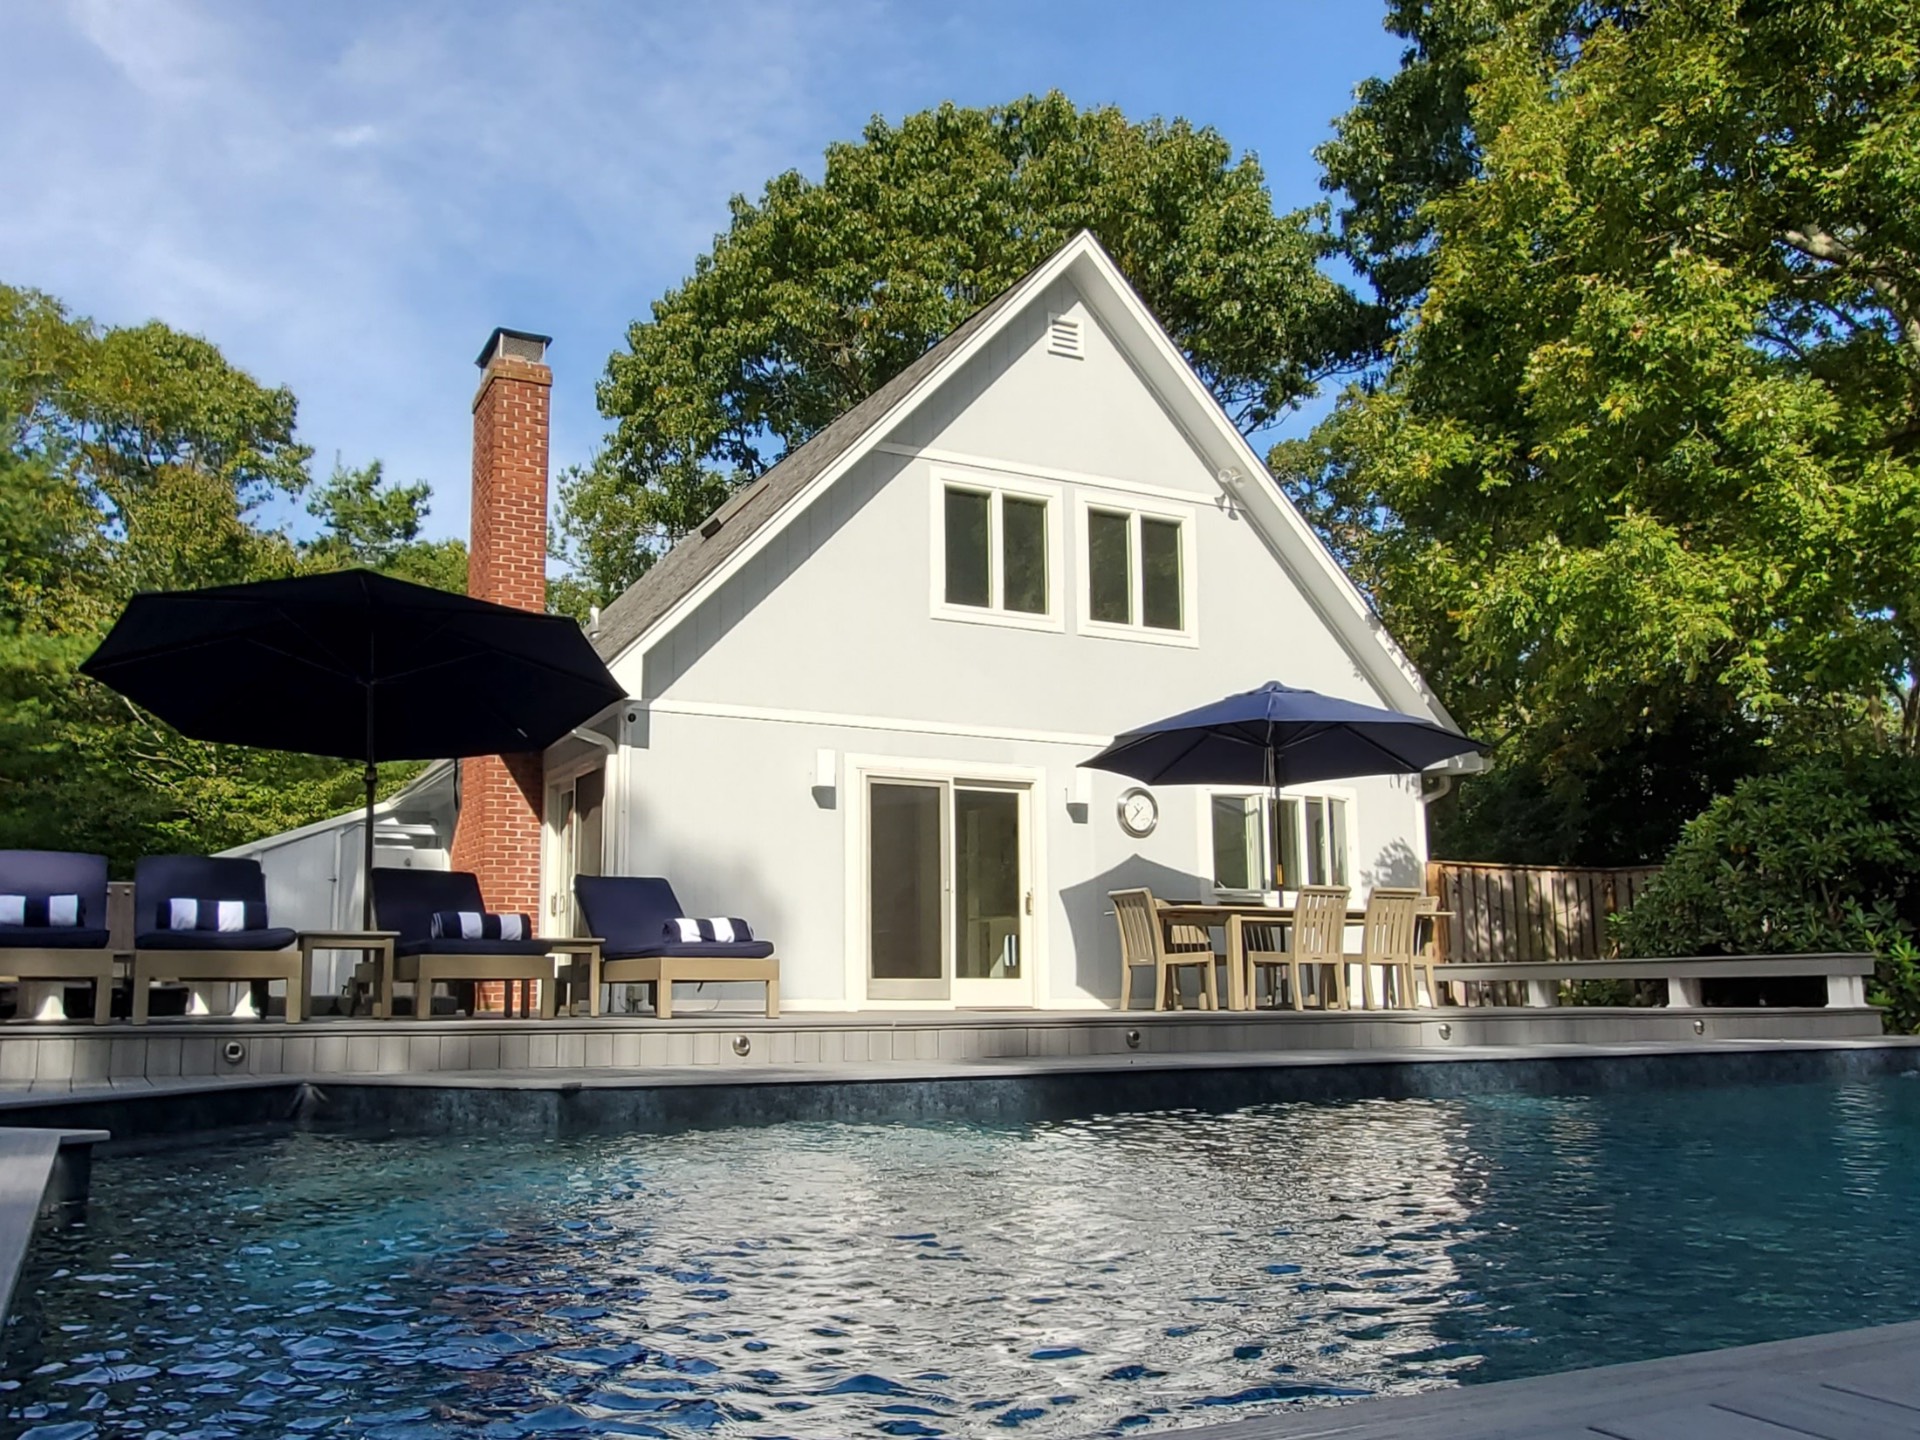 Rental Property at 128 Harbor Boulevard, Springs, Hamptons, NY - Bedrooms: 3 
Bathrooms: 2  - $25,000 MO.